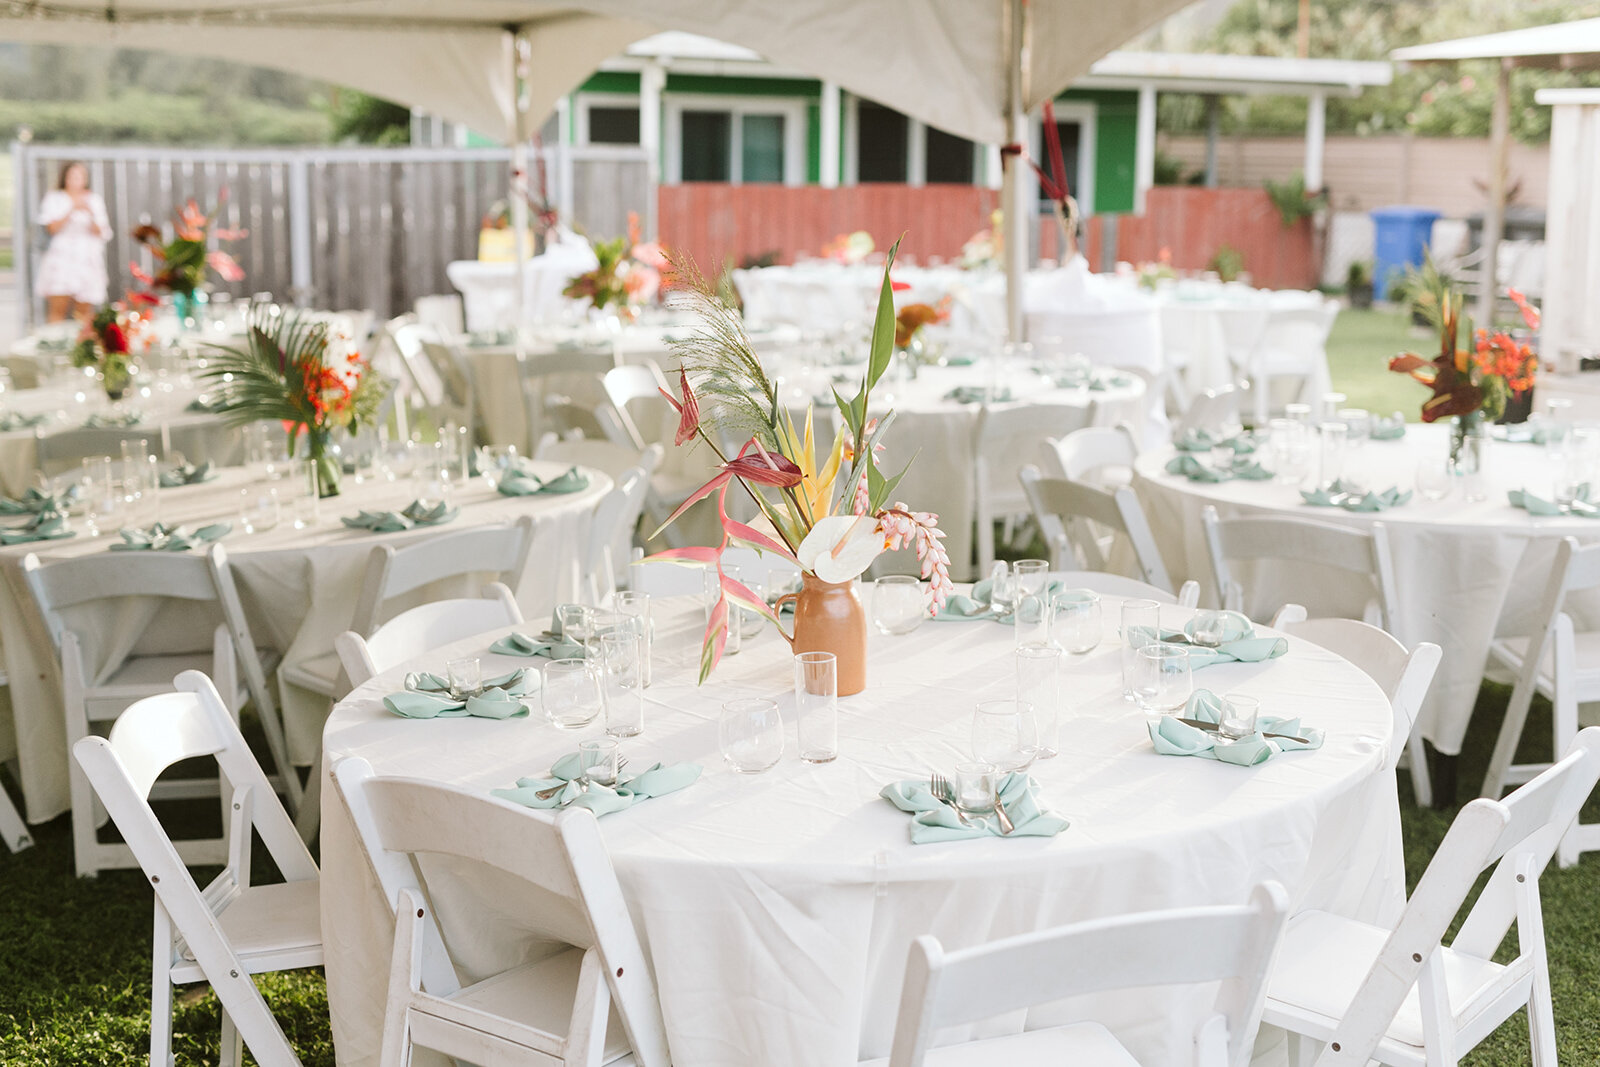 Mokuleia-North-Shore-Hawaii-Beach-House-Wedding-reception-details-floral-centerpieces